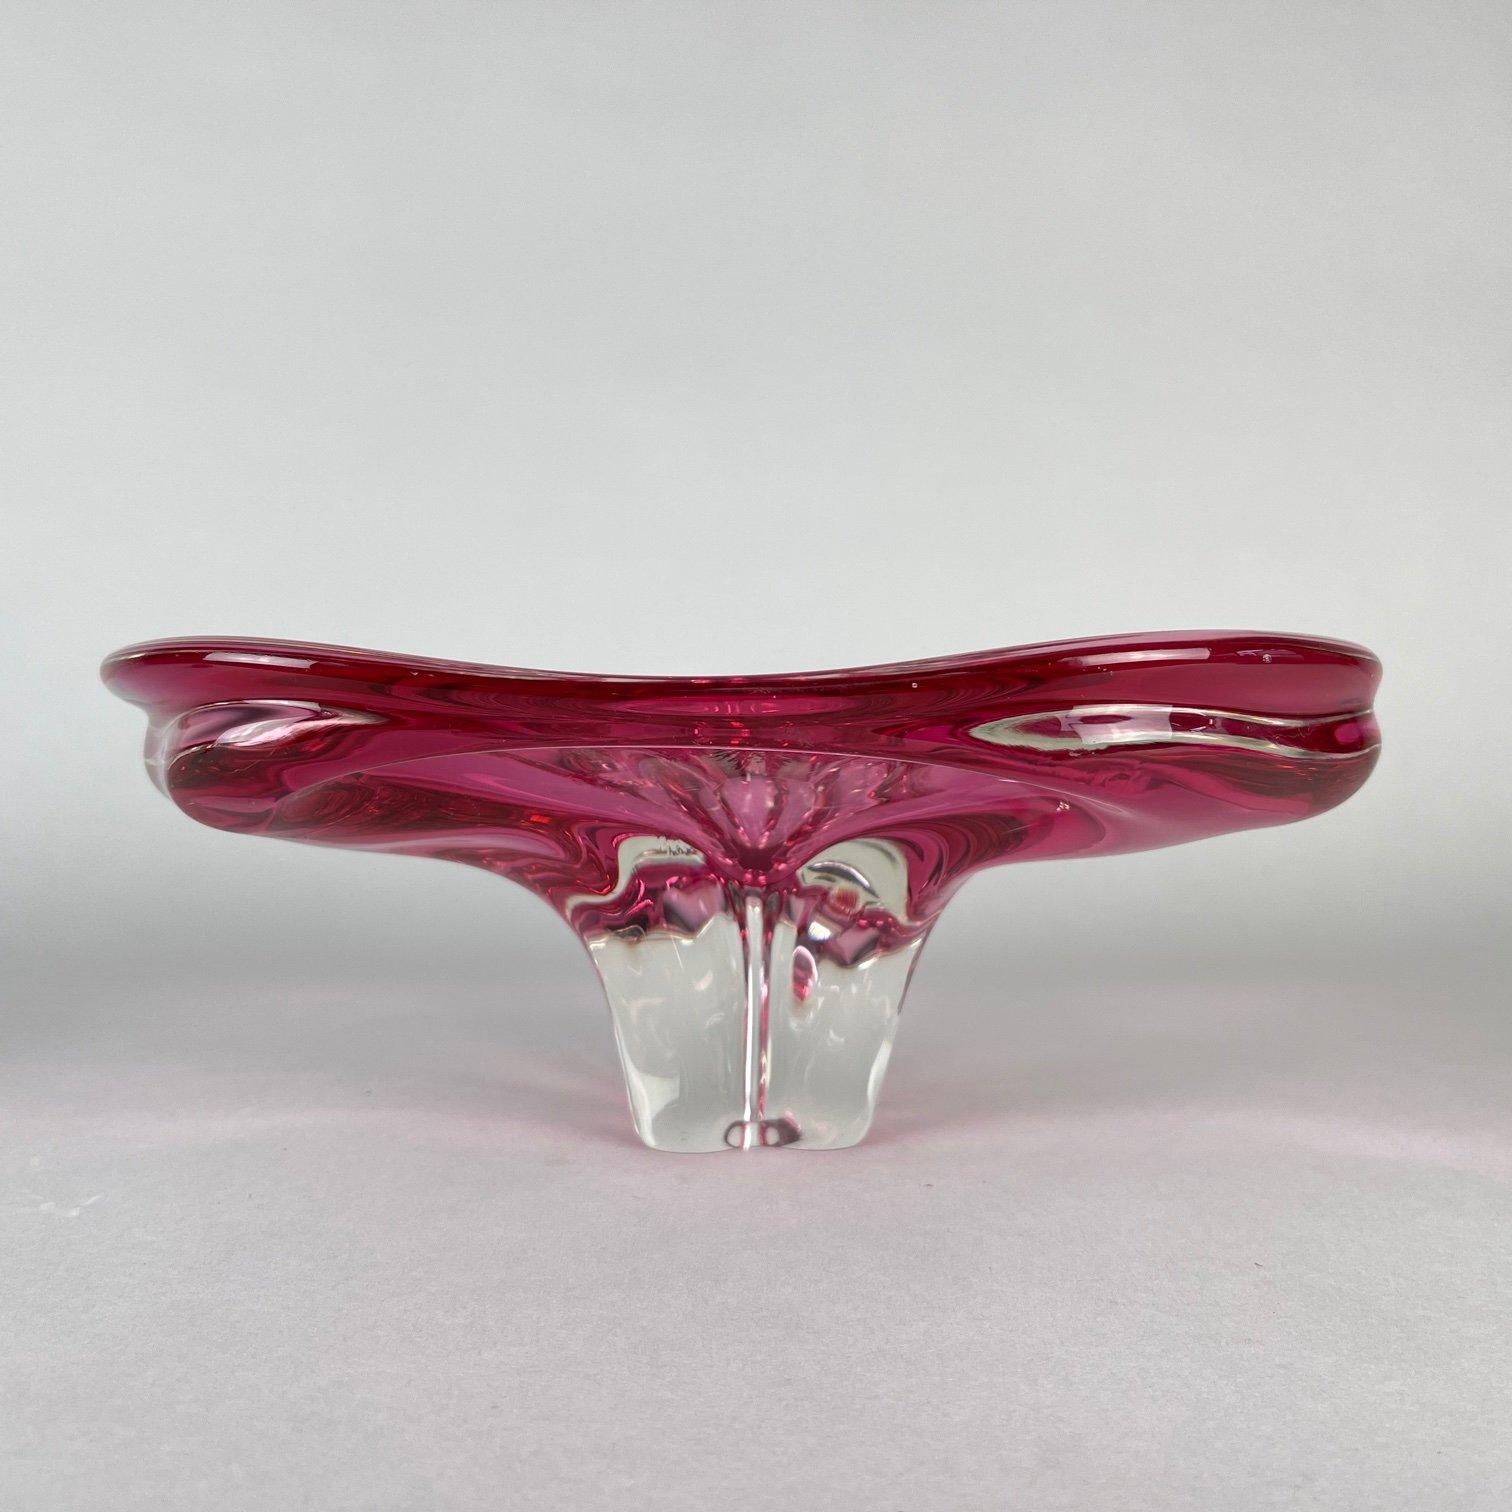 Art glass bowl by a designer Josef Hospodka, made in Chribska Glassworks in former Czechoslovakia in the 1960's.